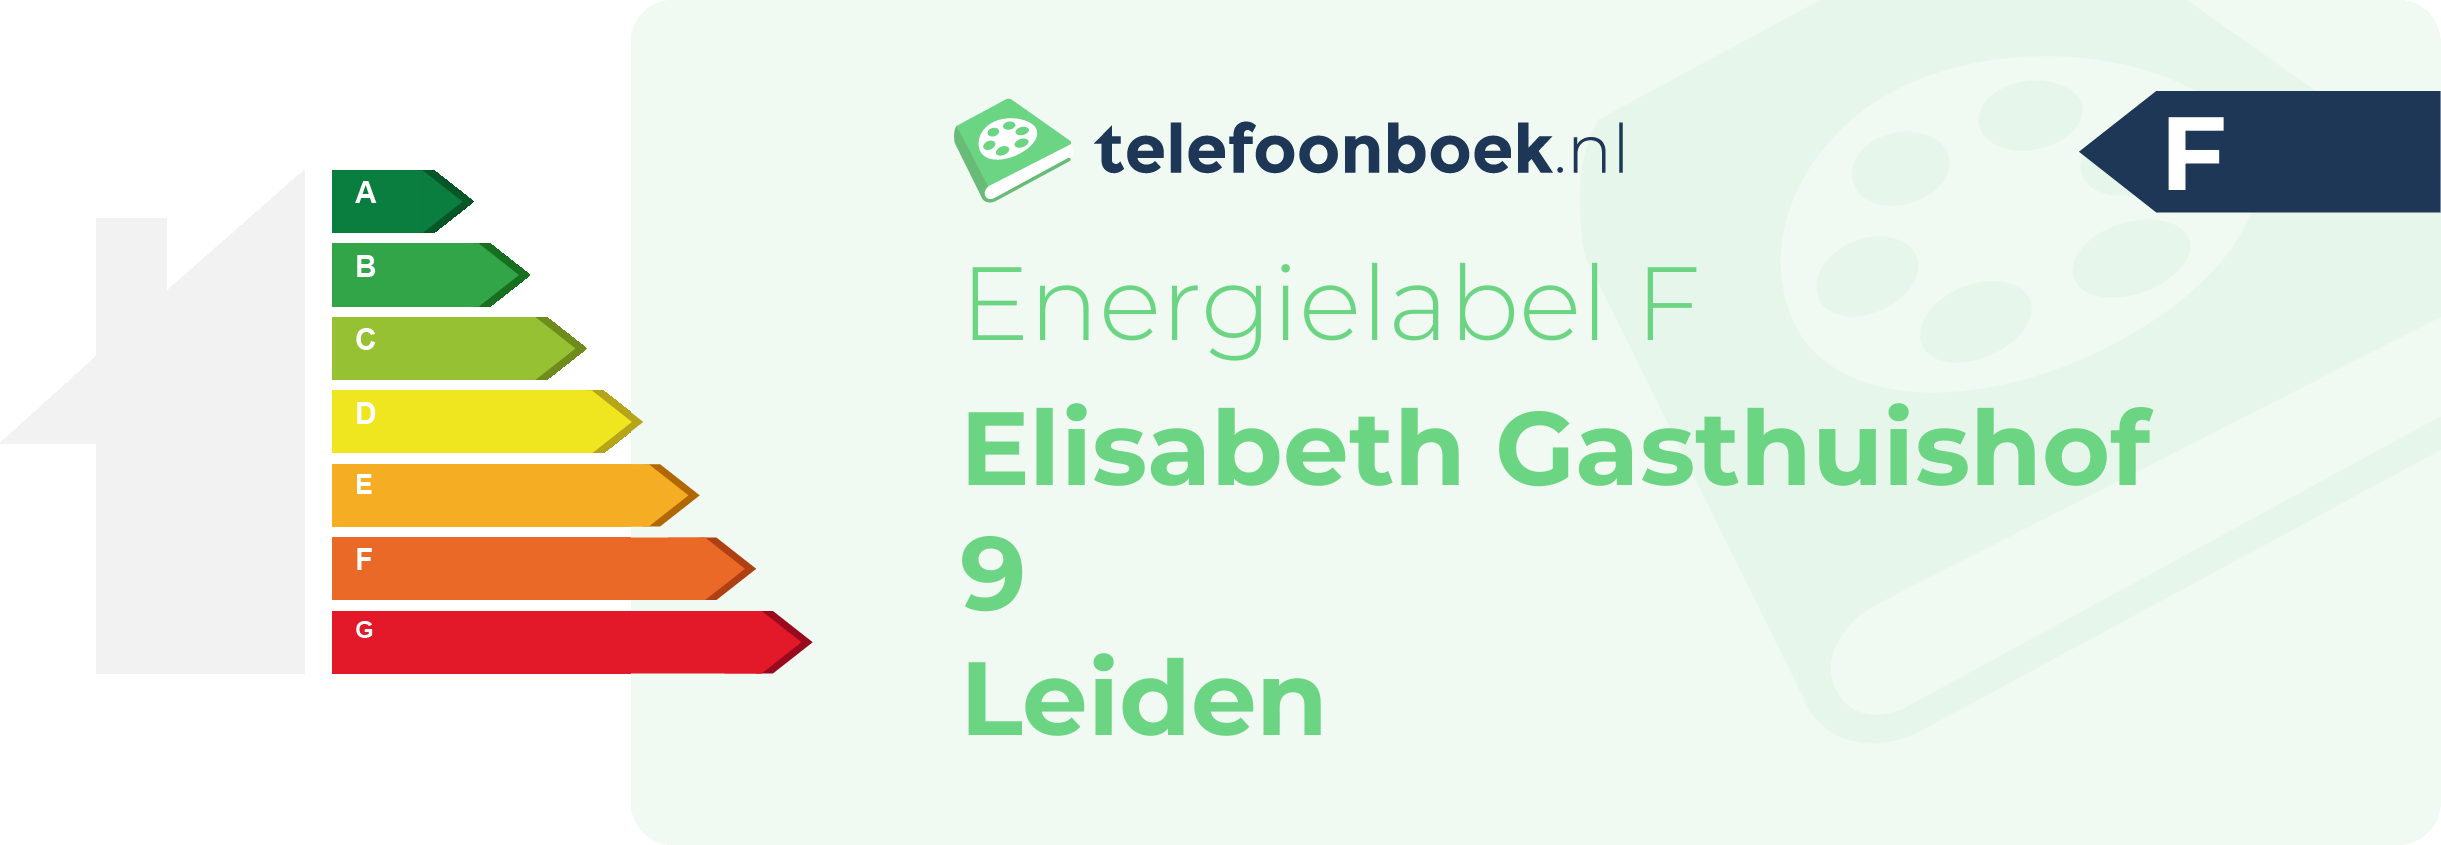 Energielabel Elisabeth Gasthuishof 9 Leiden